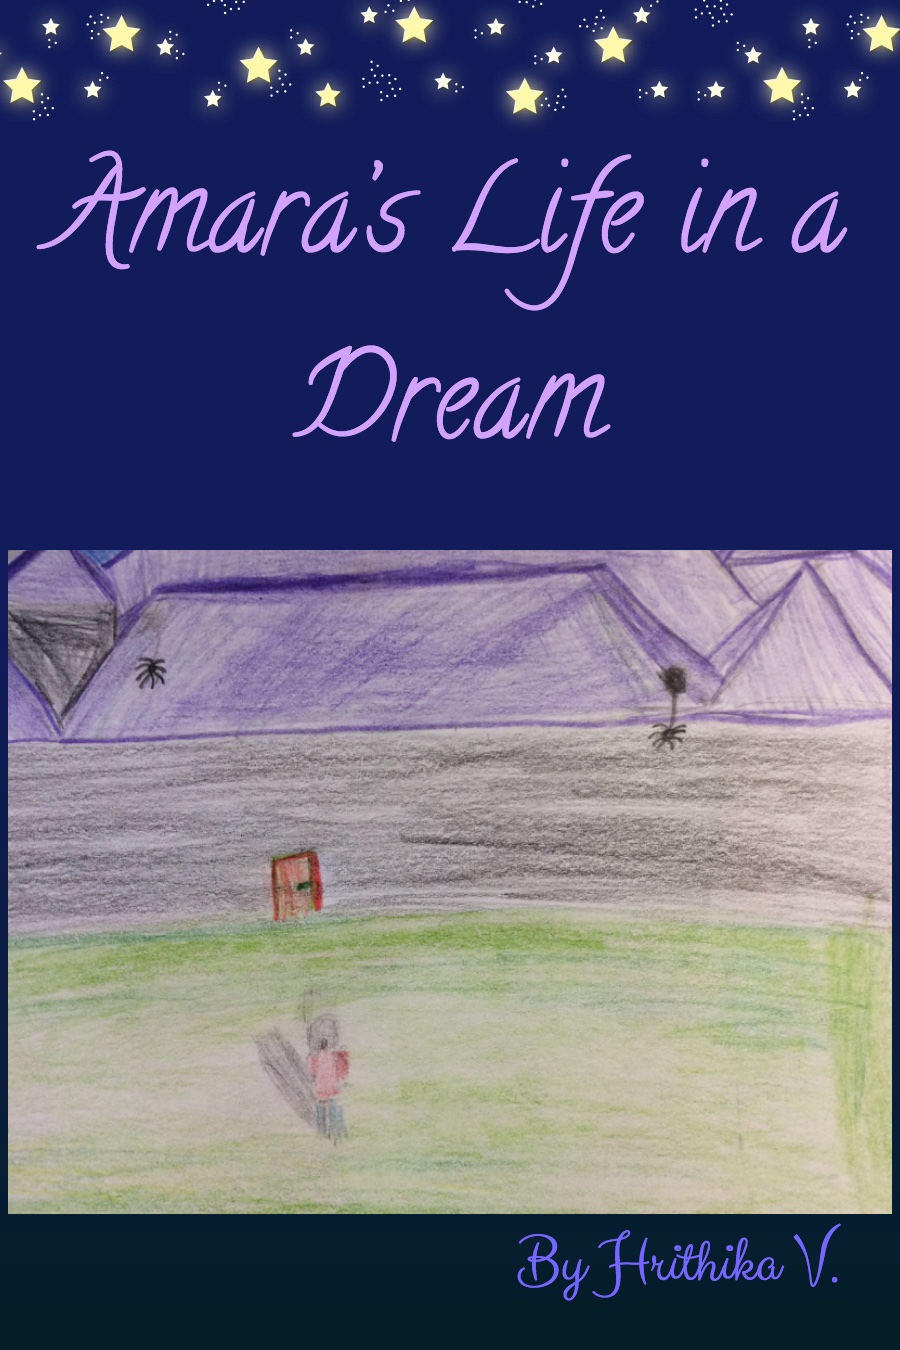 Amara’s Life in a Dream by Hrithika V